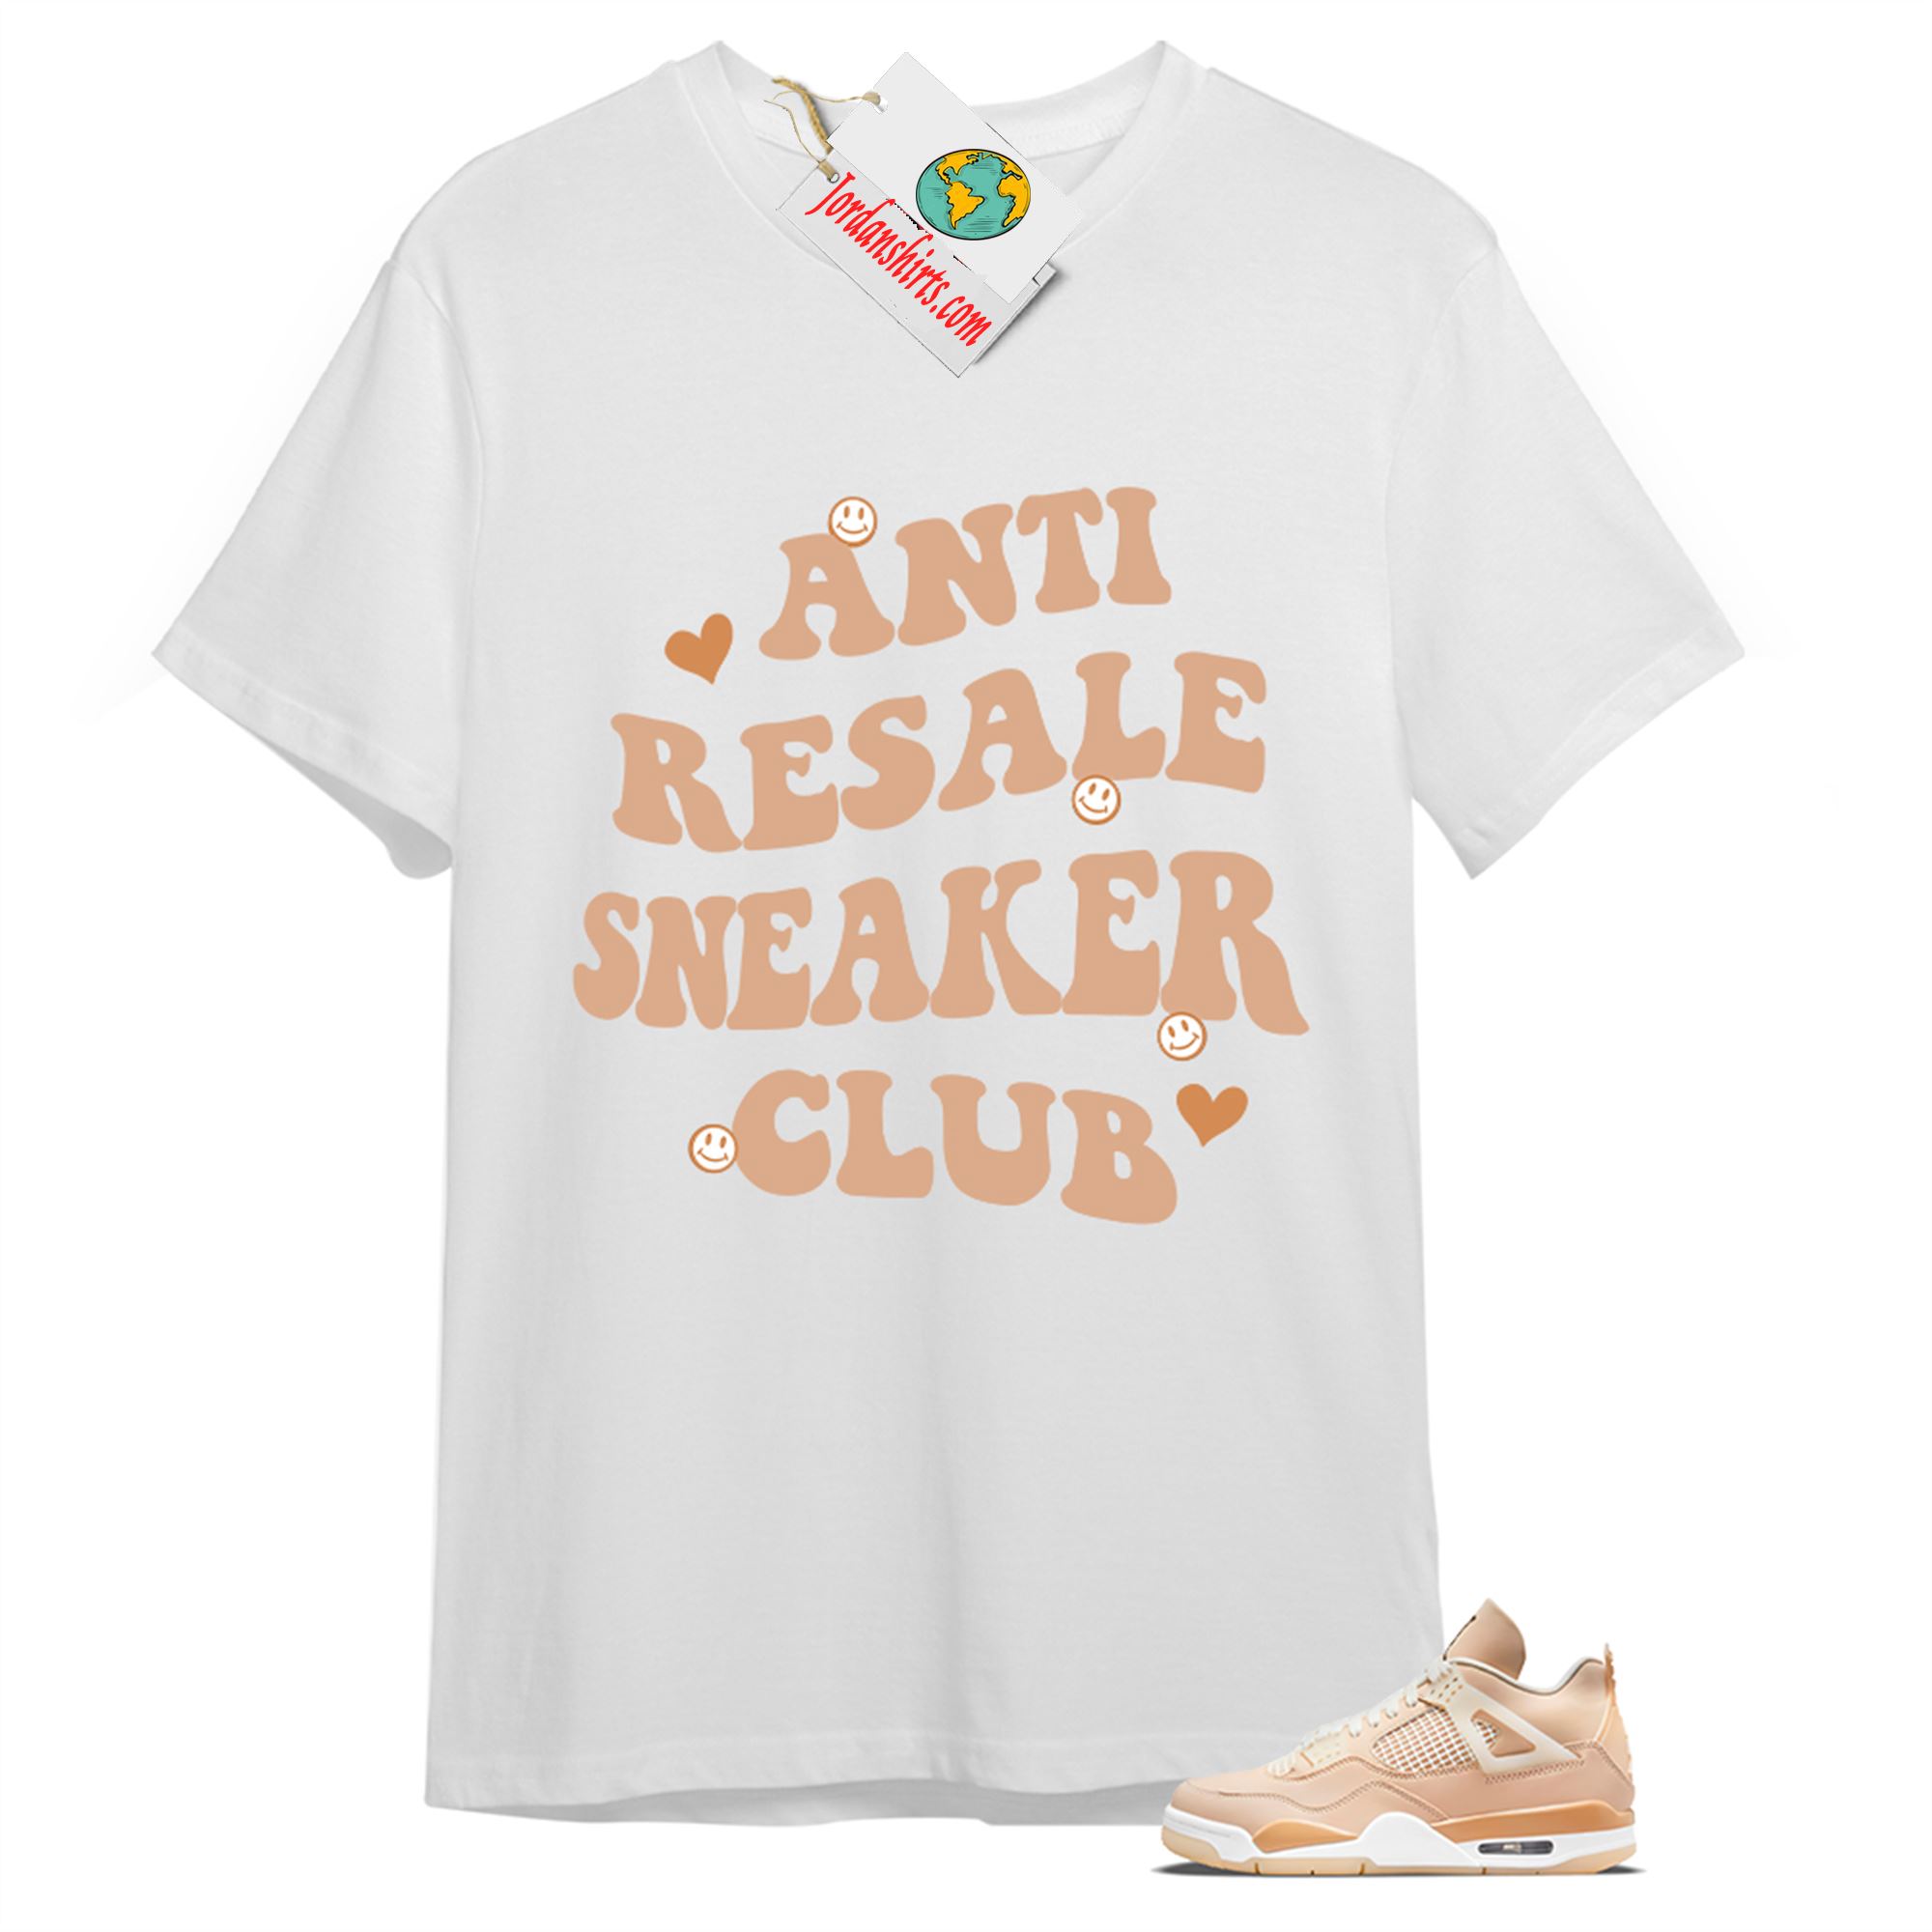 Jordan 4 Shirt, Anti Resale Sneaker Club White T-shirt Air Jordan 4 Shimmer 4s Full Size Up To 5xl